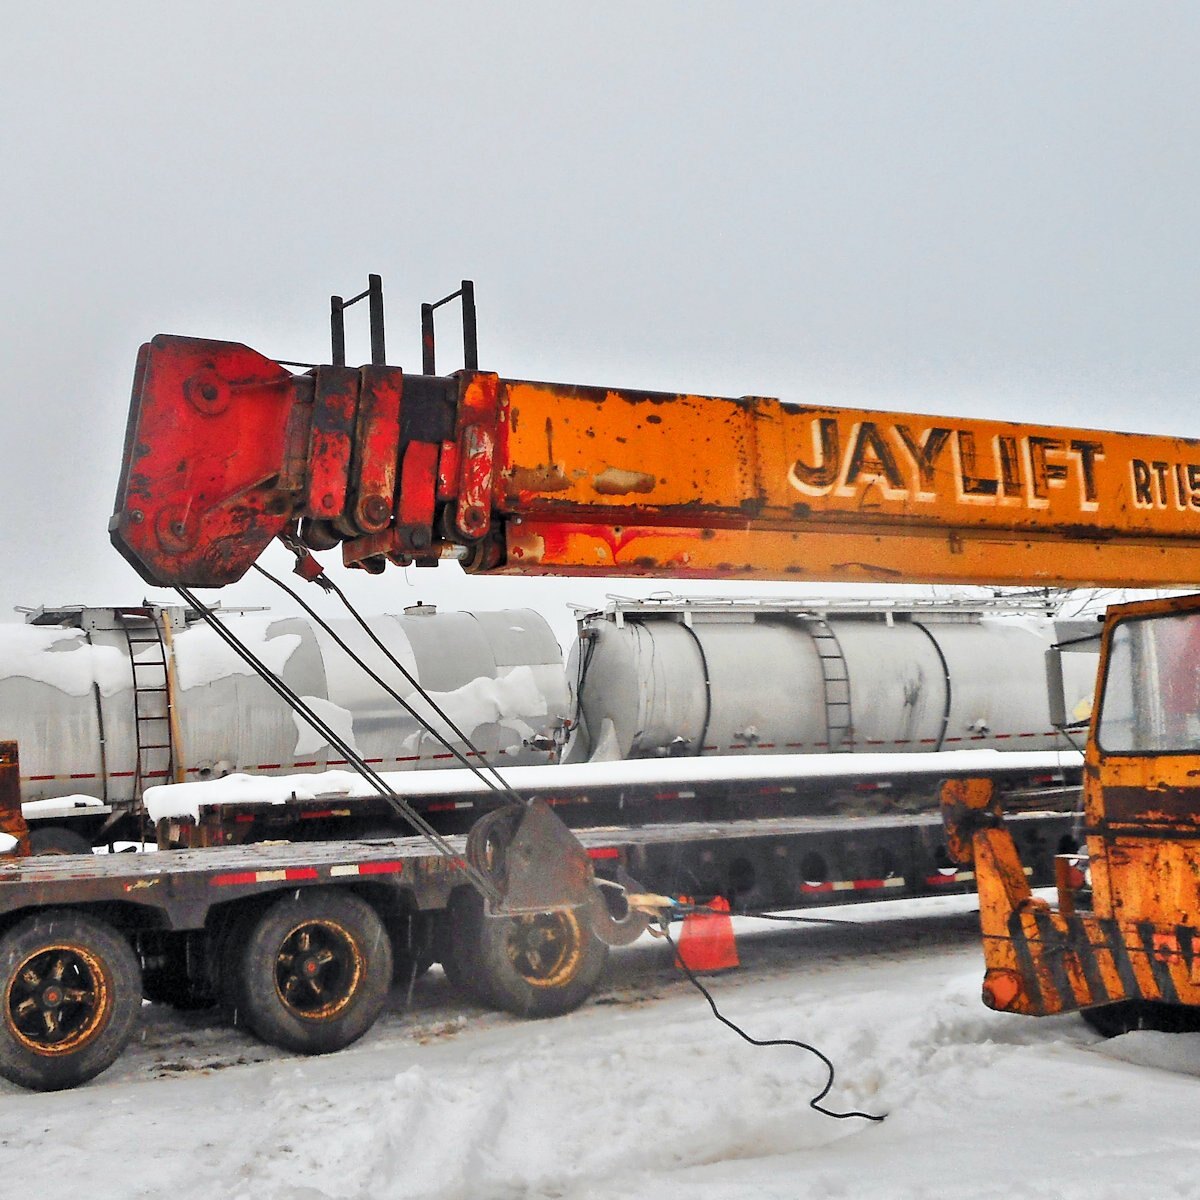 Jay Lift RT150 4x4 Rough Terrain Mobile Crane